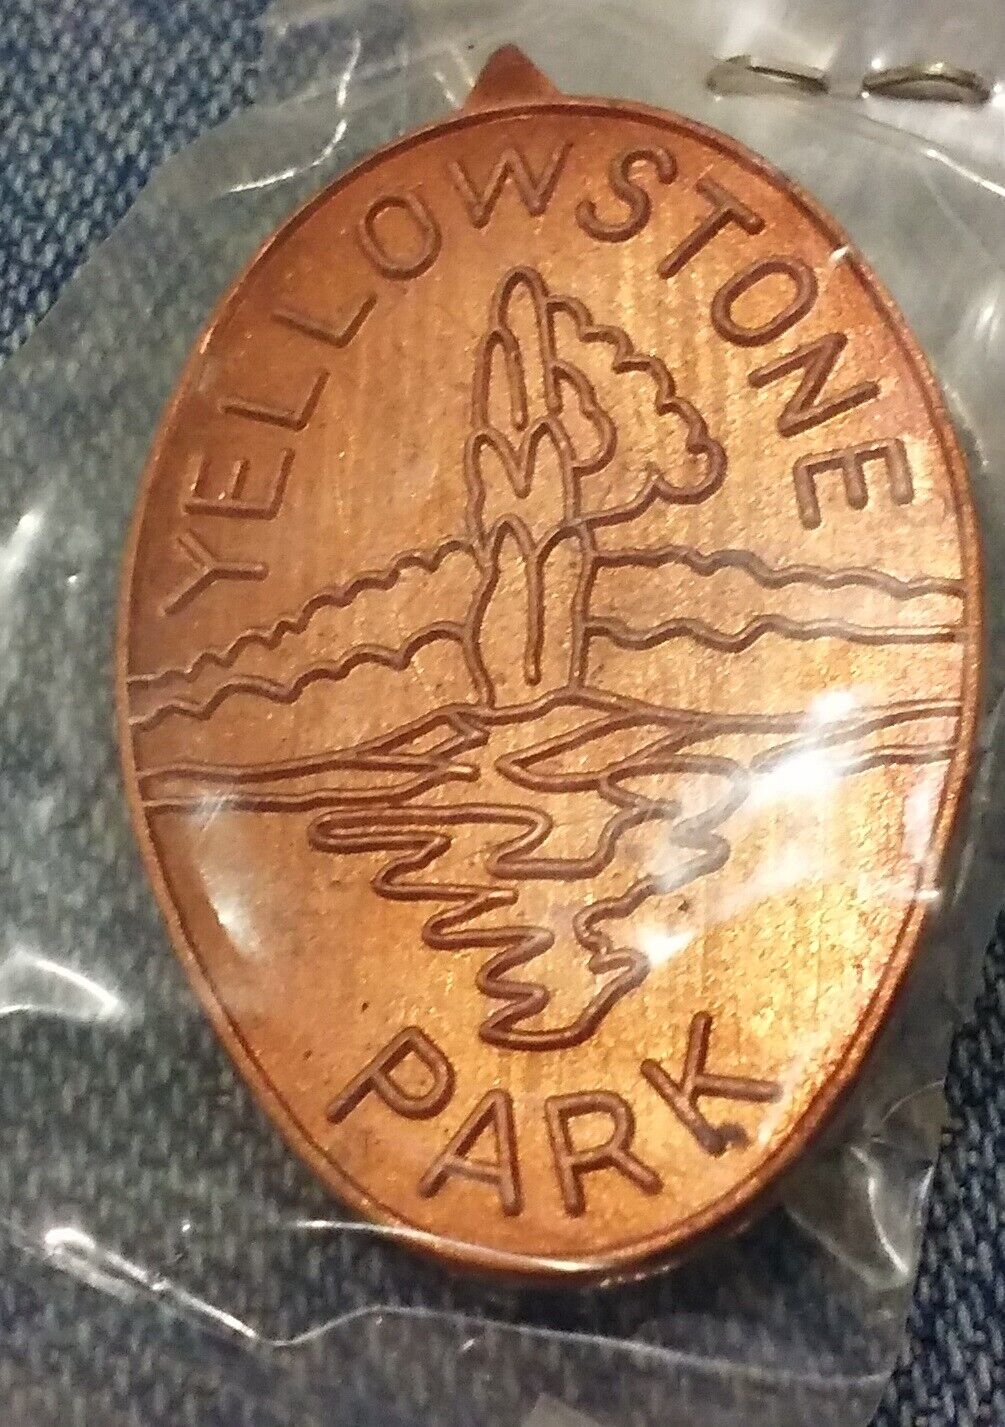 Yellowstone National Park vintage souvenir pin badge Old Faithful Geyser